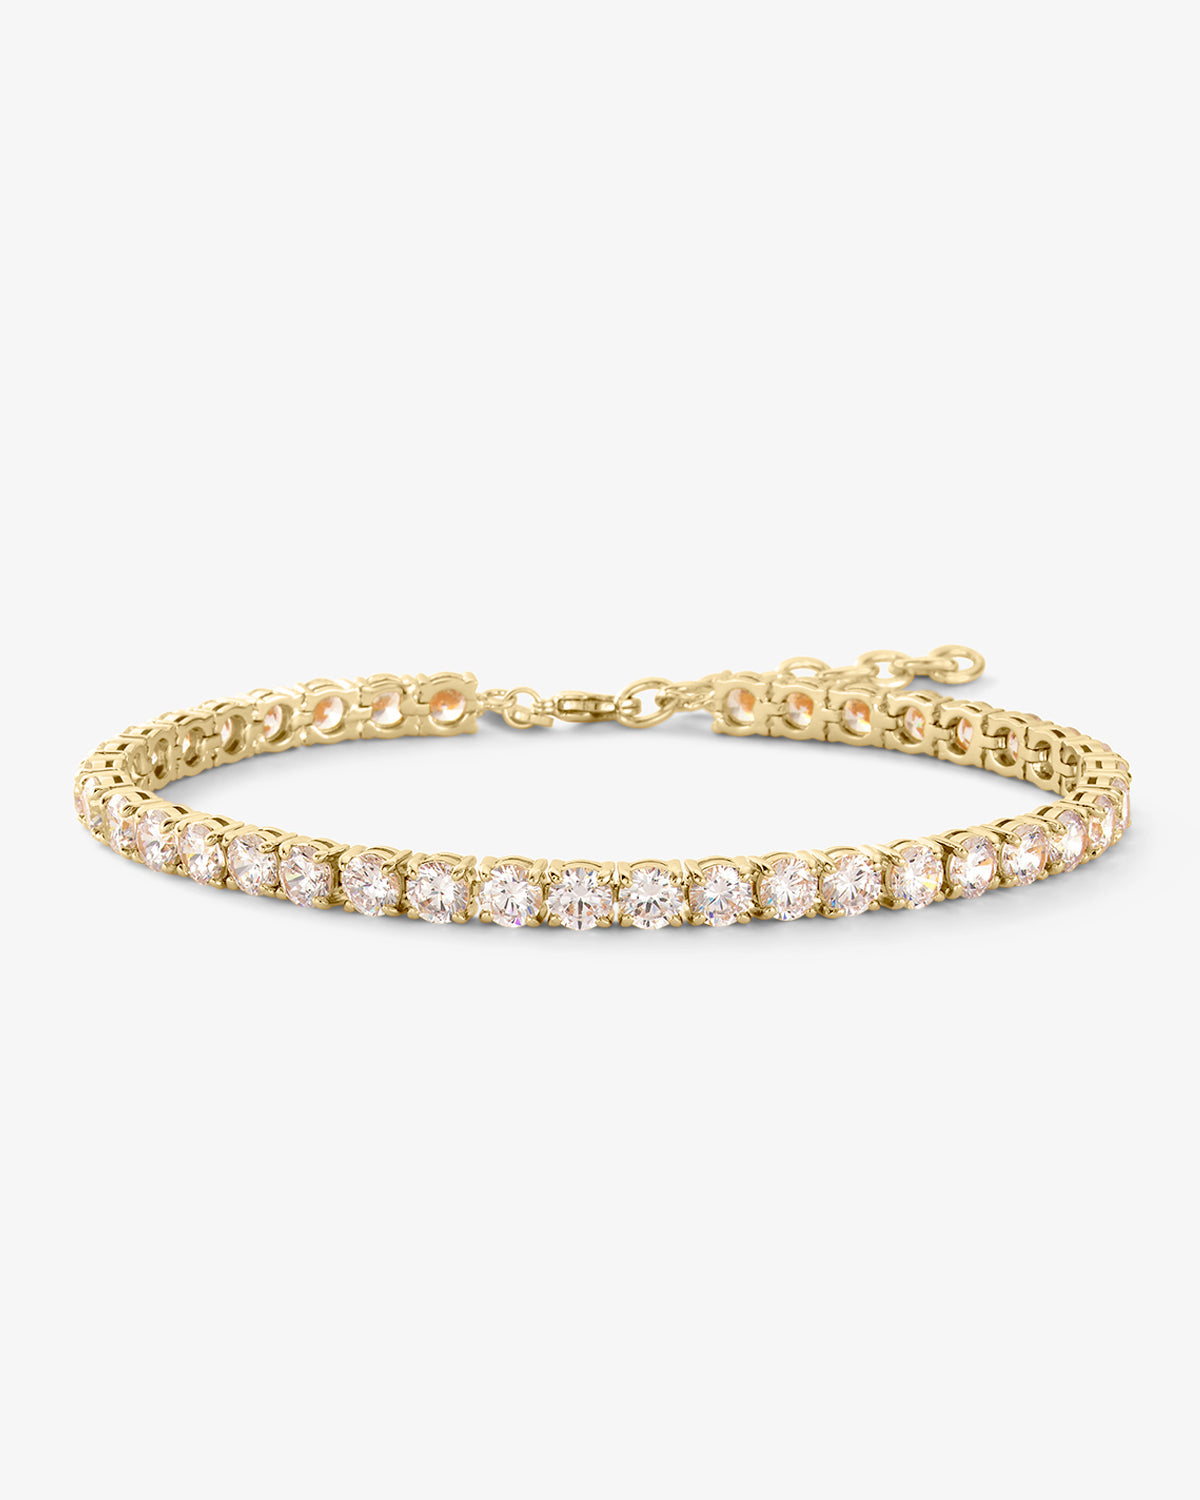 Mama Heiress Anklet - Gold|White Diamondettes – Melinda Maria Jewelry